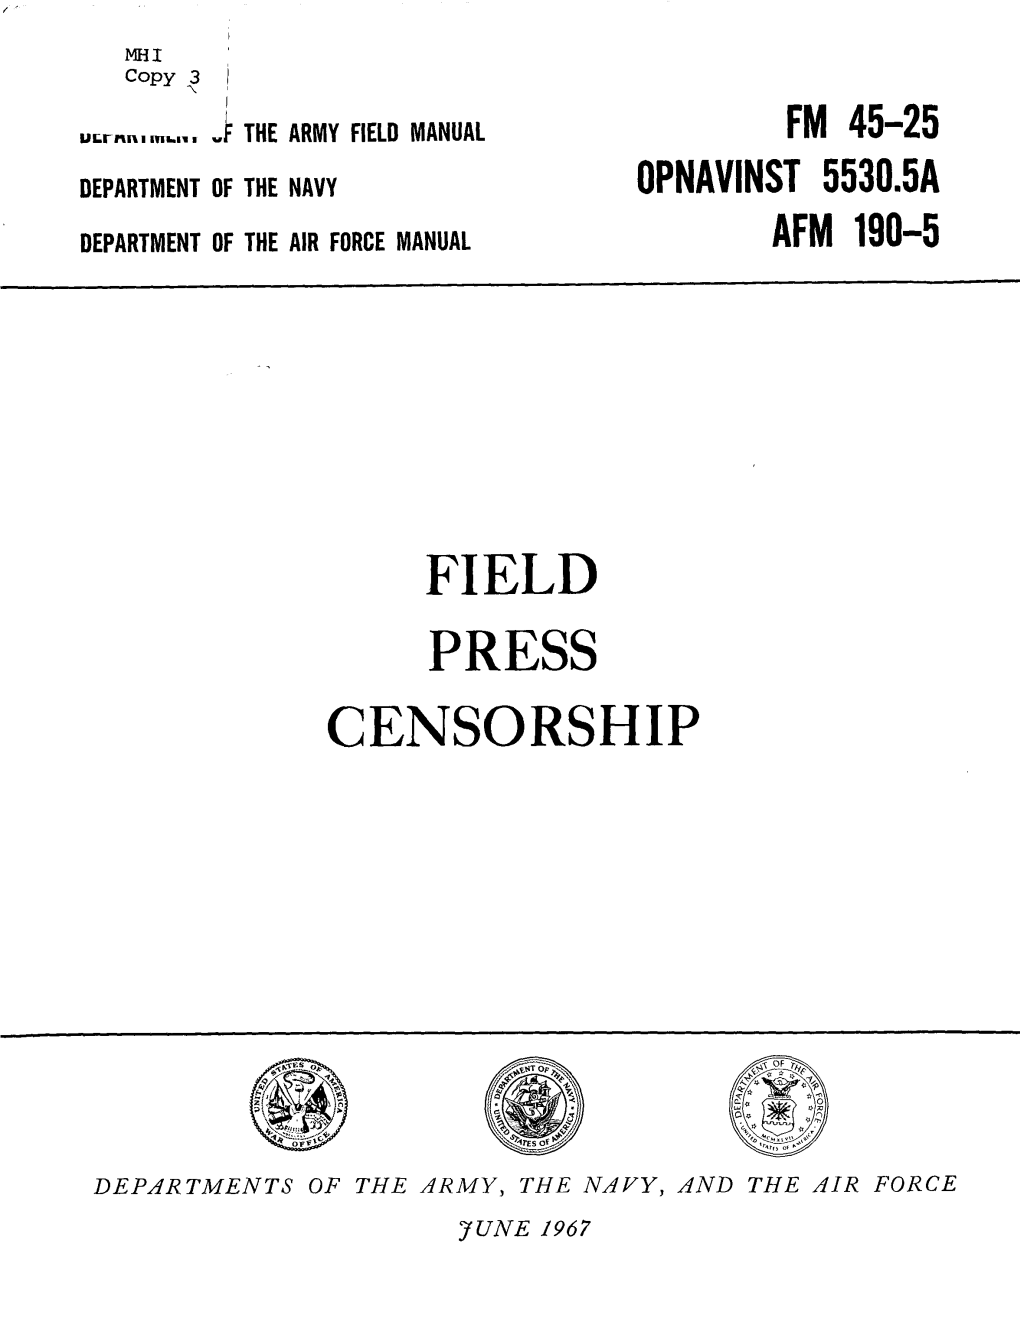 Field Press Censorship